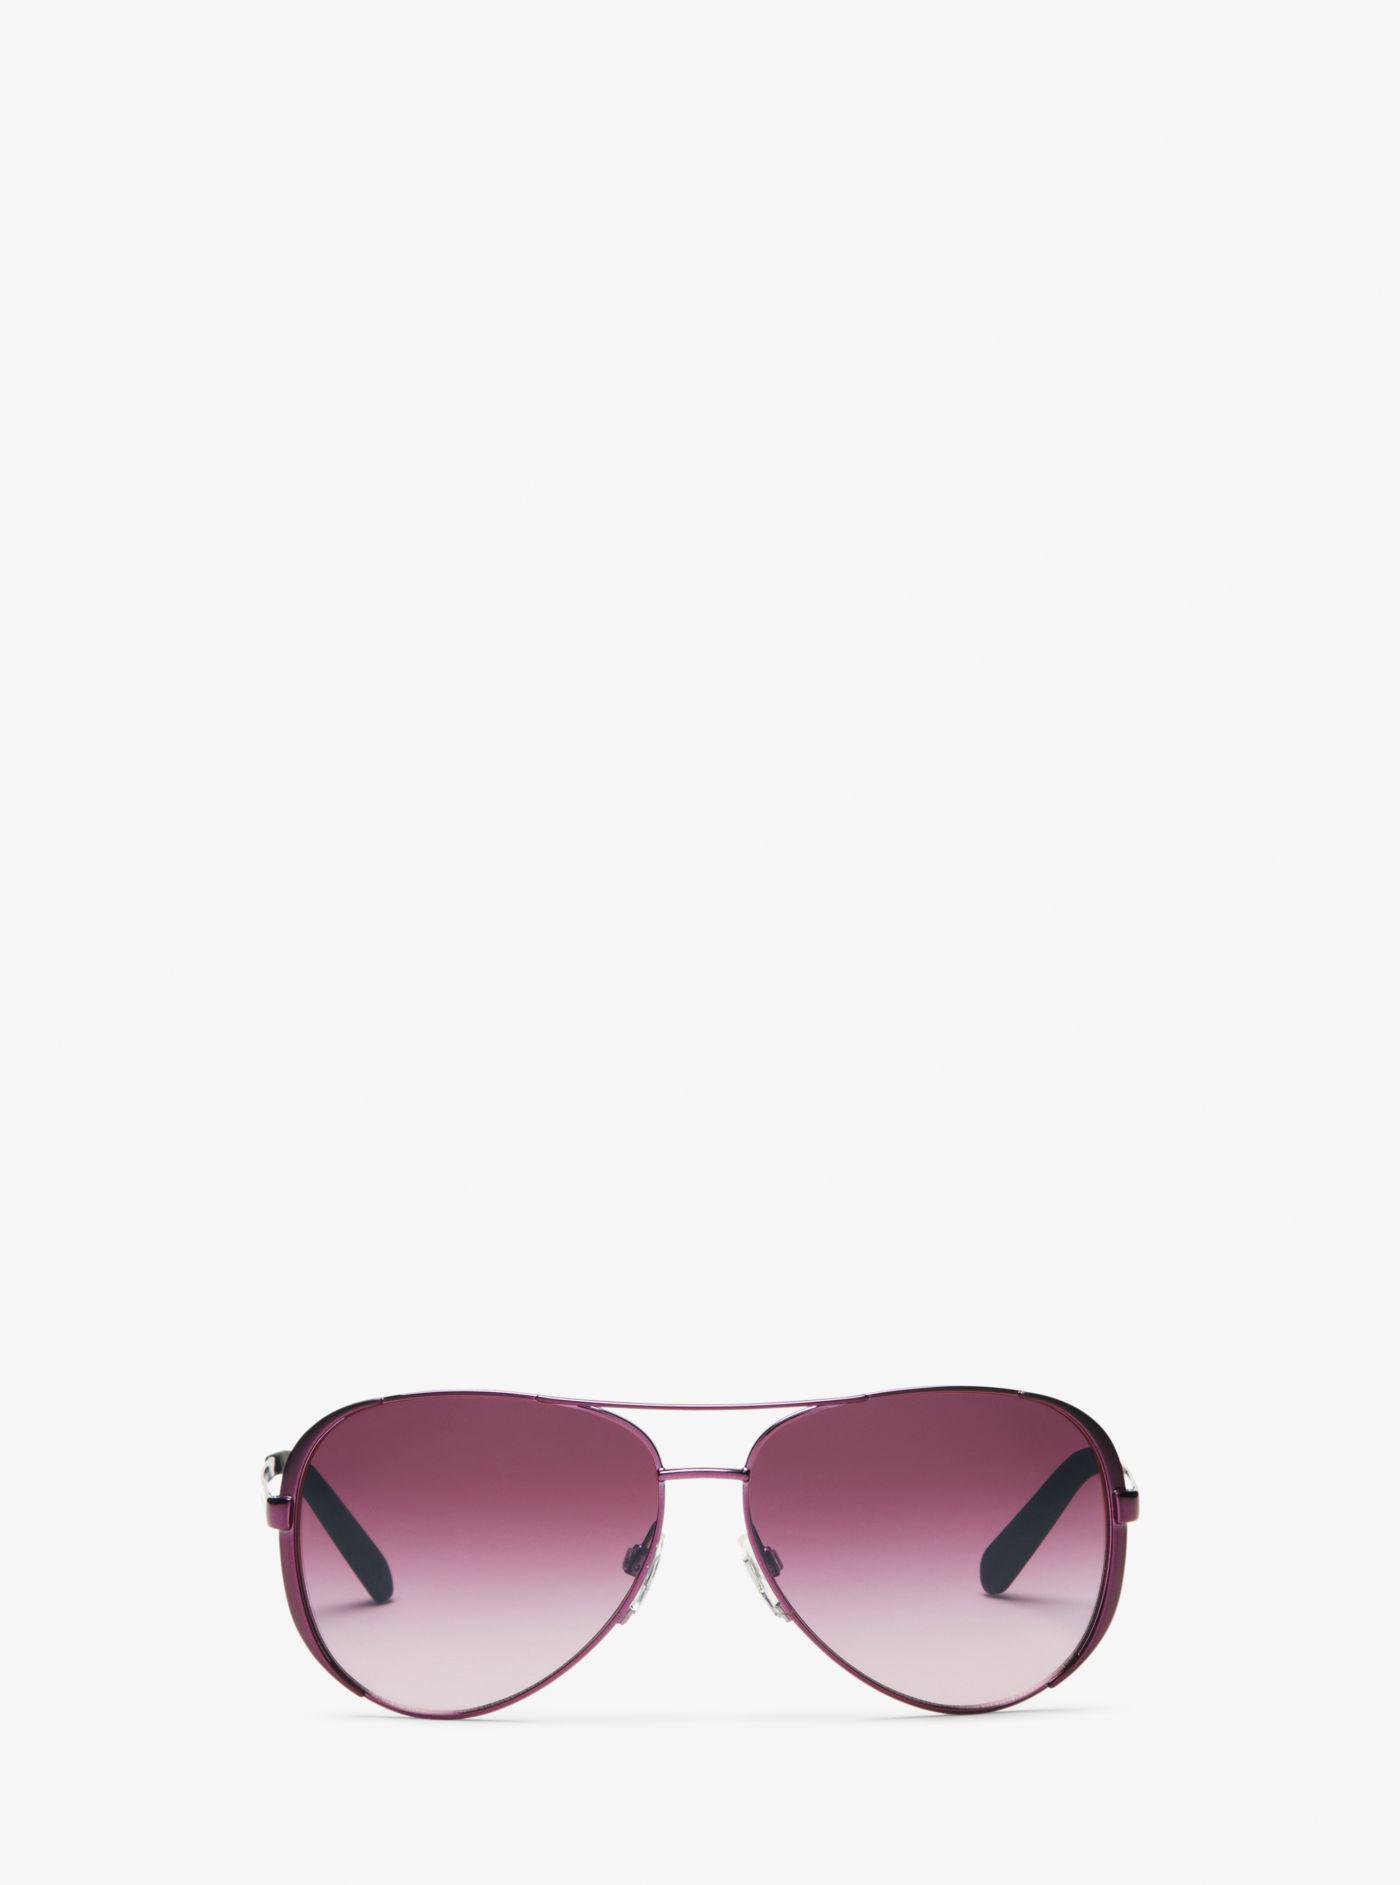 Michael Kors Mk5004 Chelsea Aviator Sunglasses For +free Complimentary  Eyewear Care Kit in Burgundy (Purple) - Save 15% - Lyst